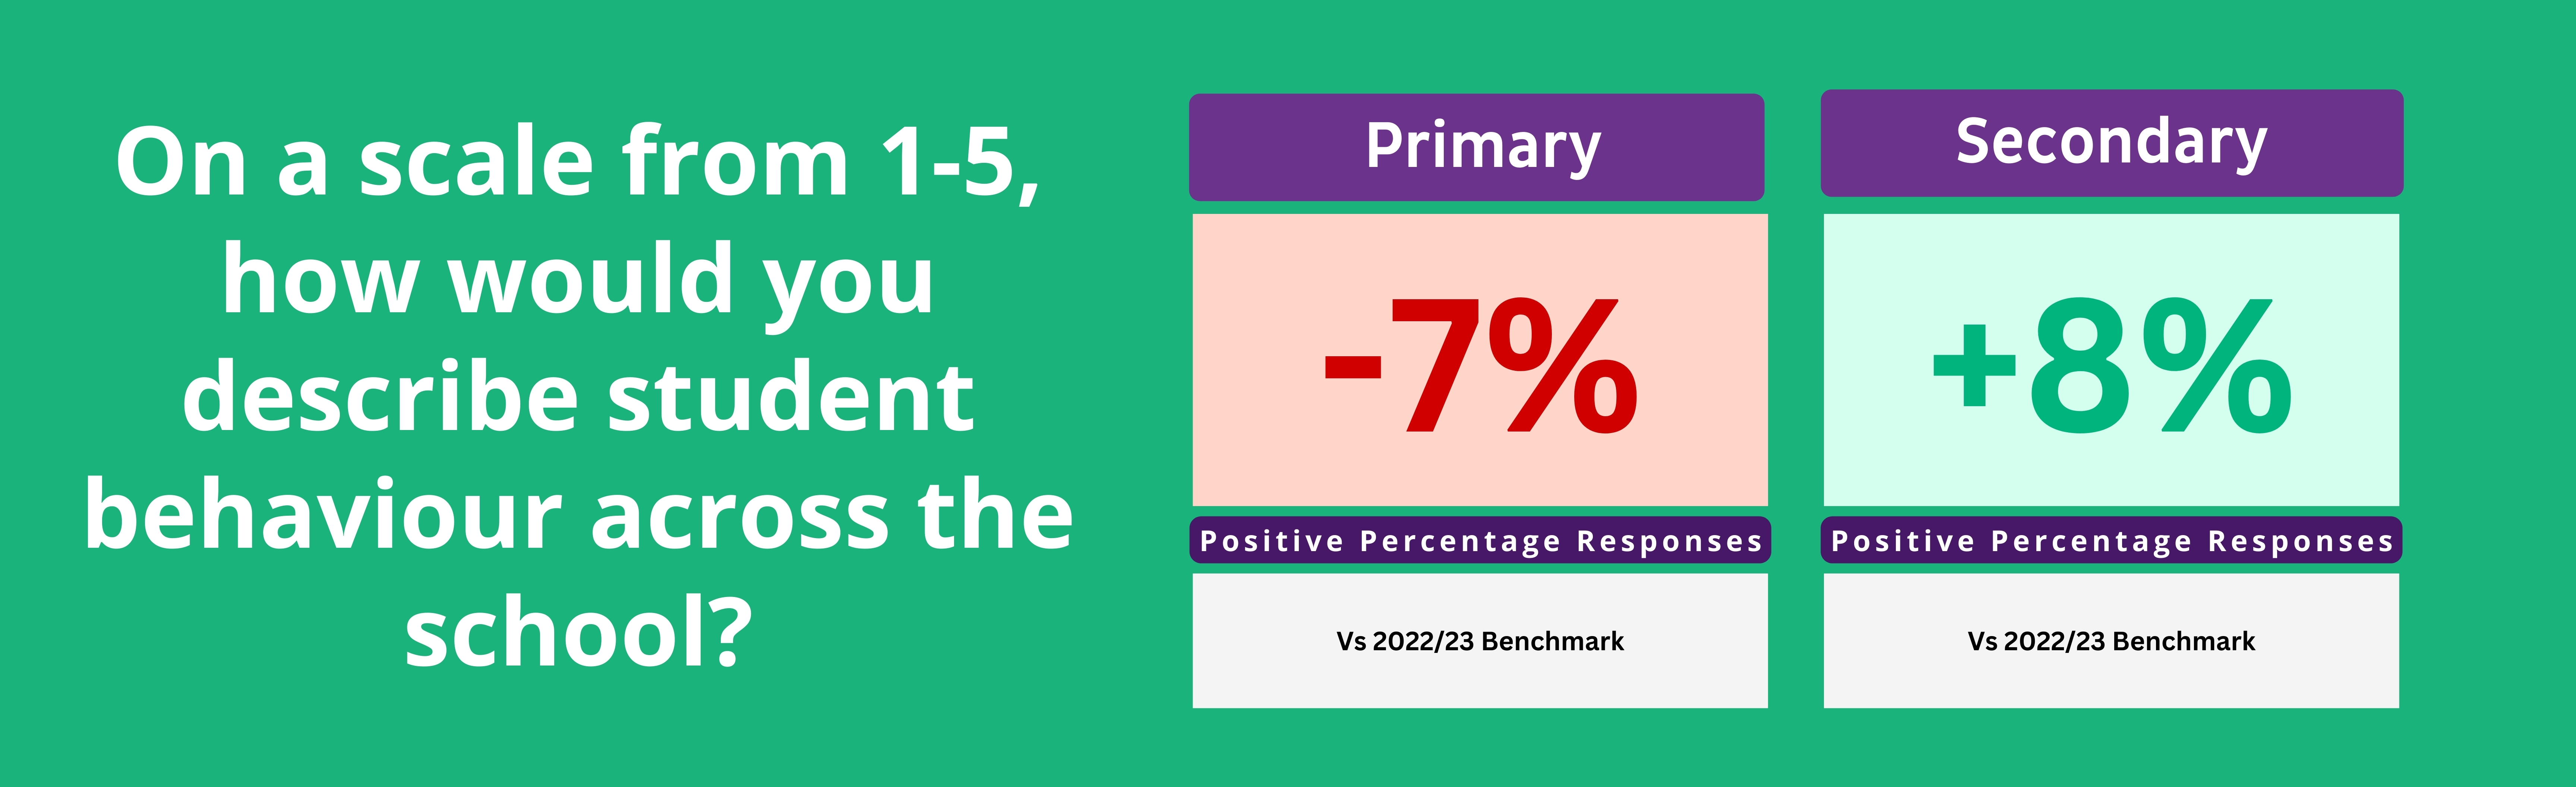 Edurio survey results on pupil behaviour in schools